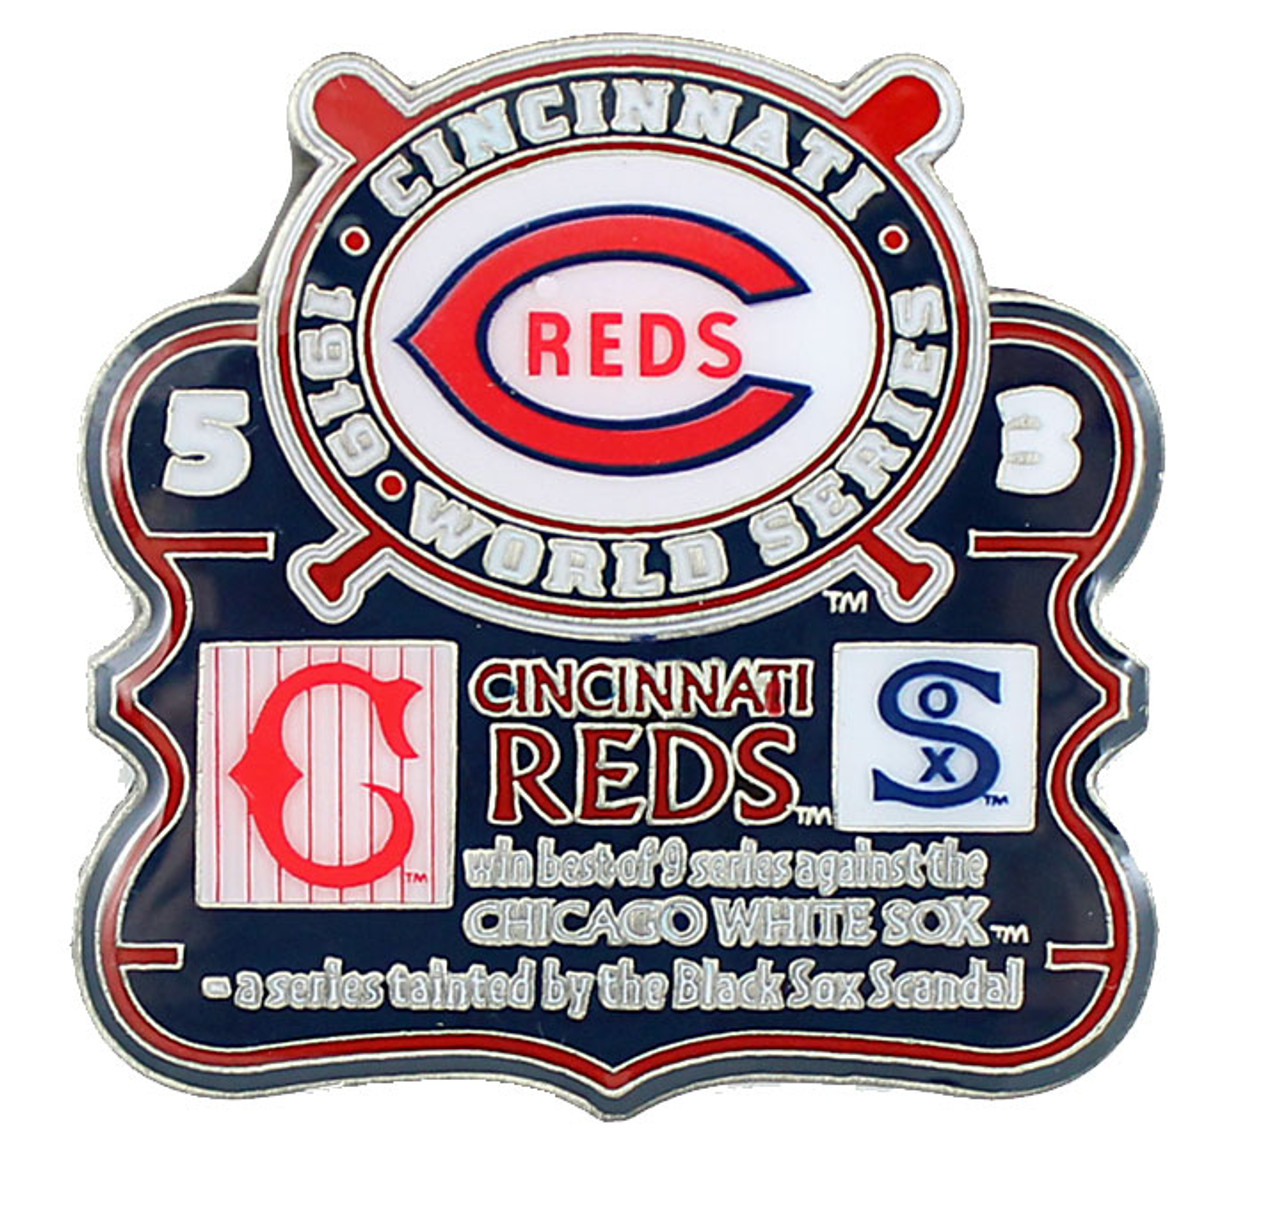 1919 Cincinnati Reds World Series Winning Team